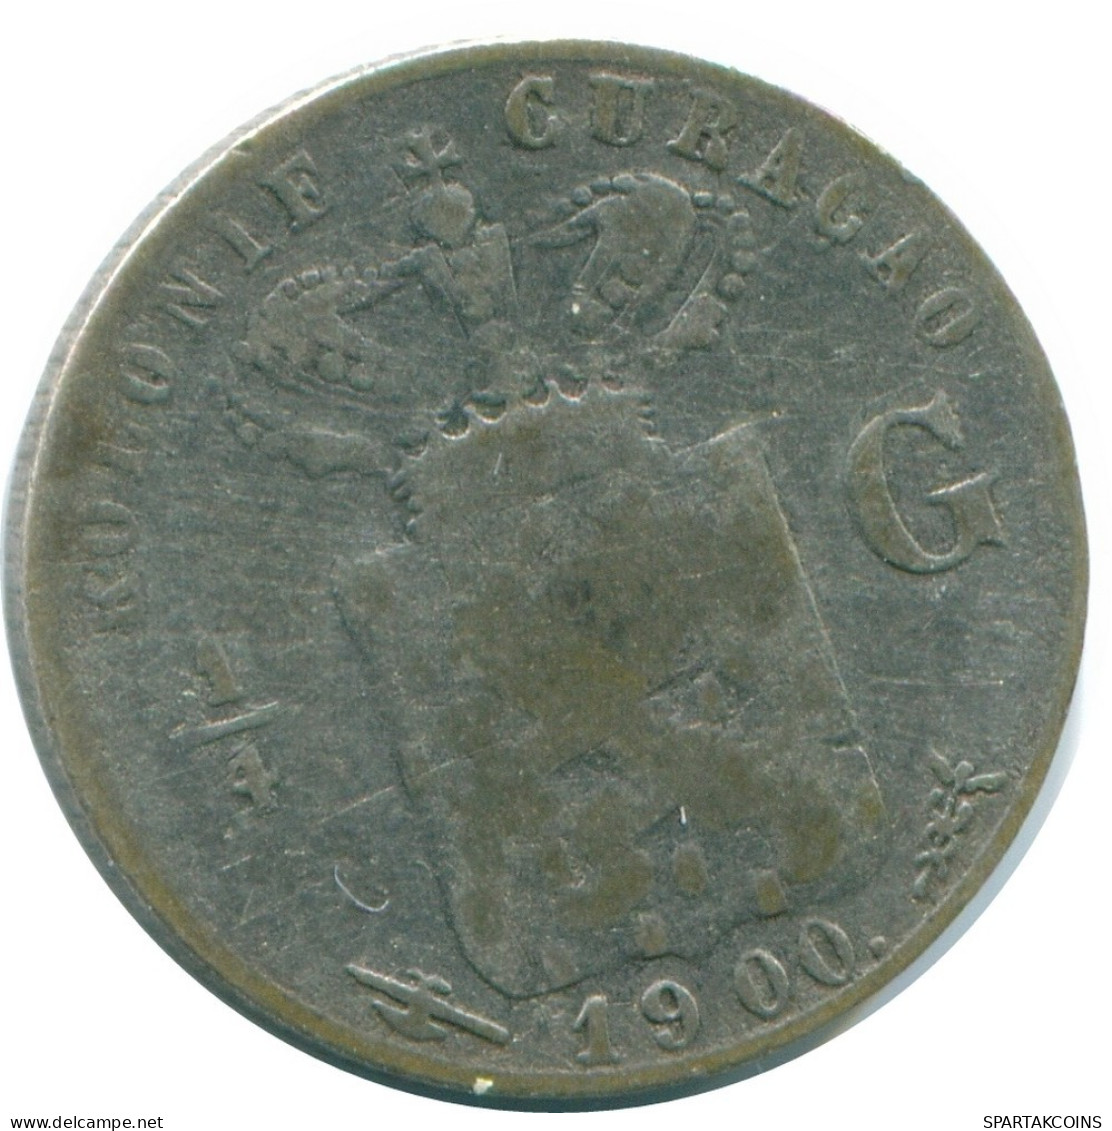 1/4 GULDEN 1900 CURACAO Netherlands SILVER Colonial Coin #NL10500.4.U.A - Curacao